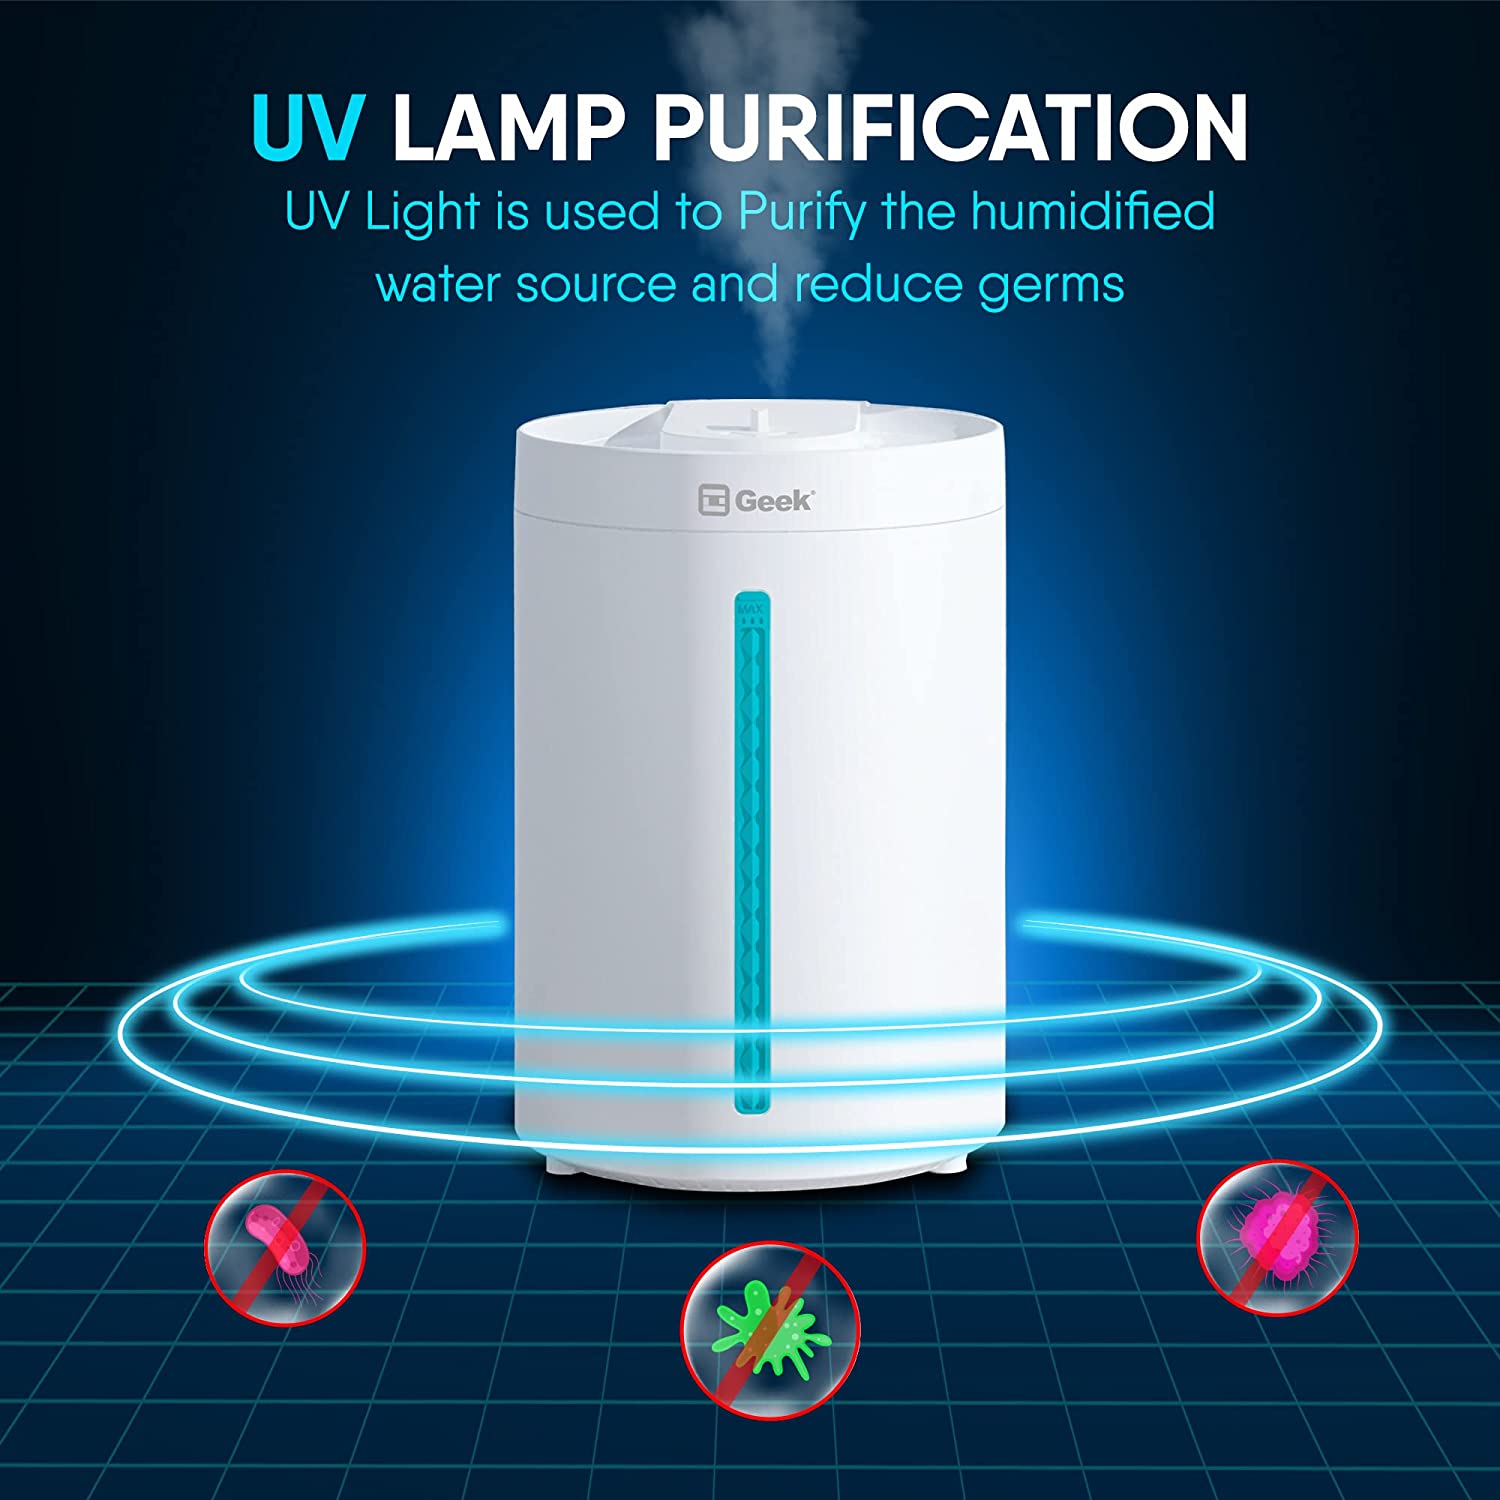 Geek Nyorova H13, 2-IN-1 Digital Ultraviolet Humidifier (4L ) Top Fill